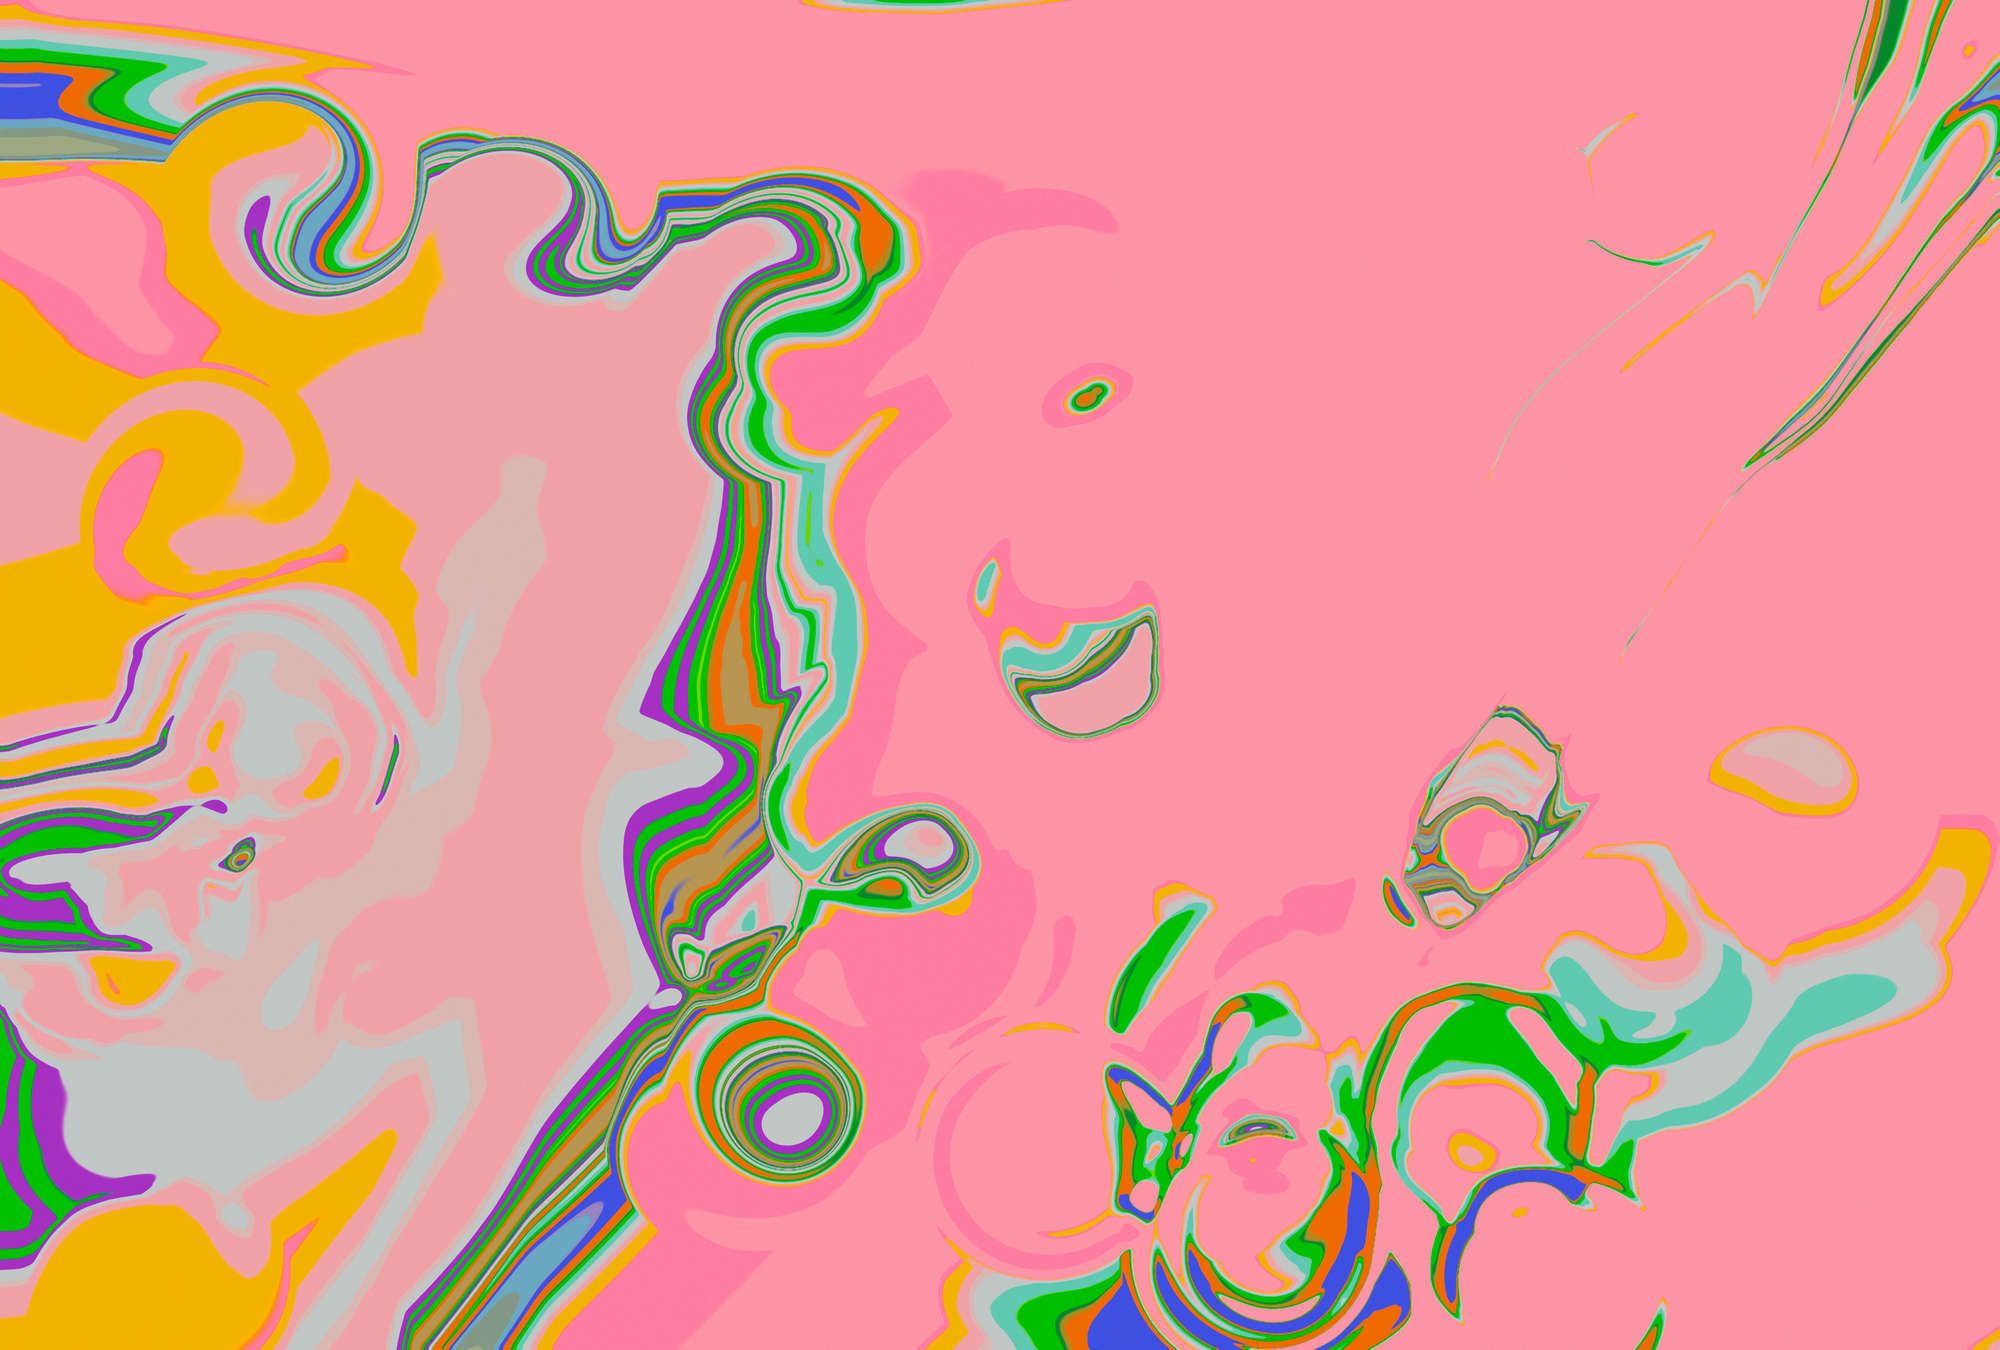             Photo wallpaper »fluxus« - colour splash colourful - pink, green | matt, smooth non-woven
        